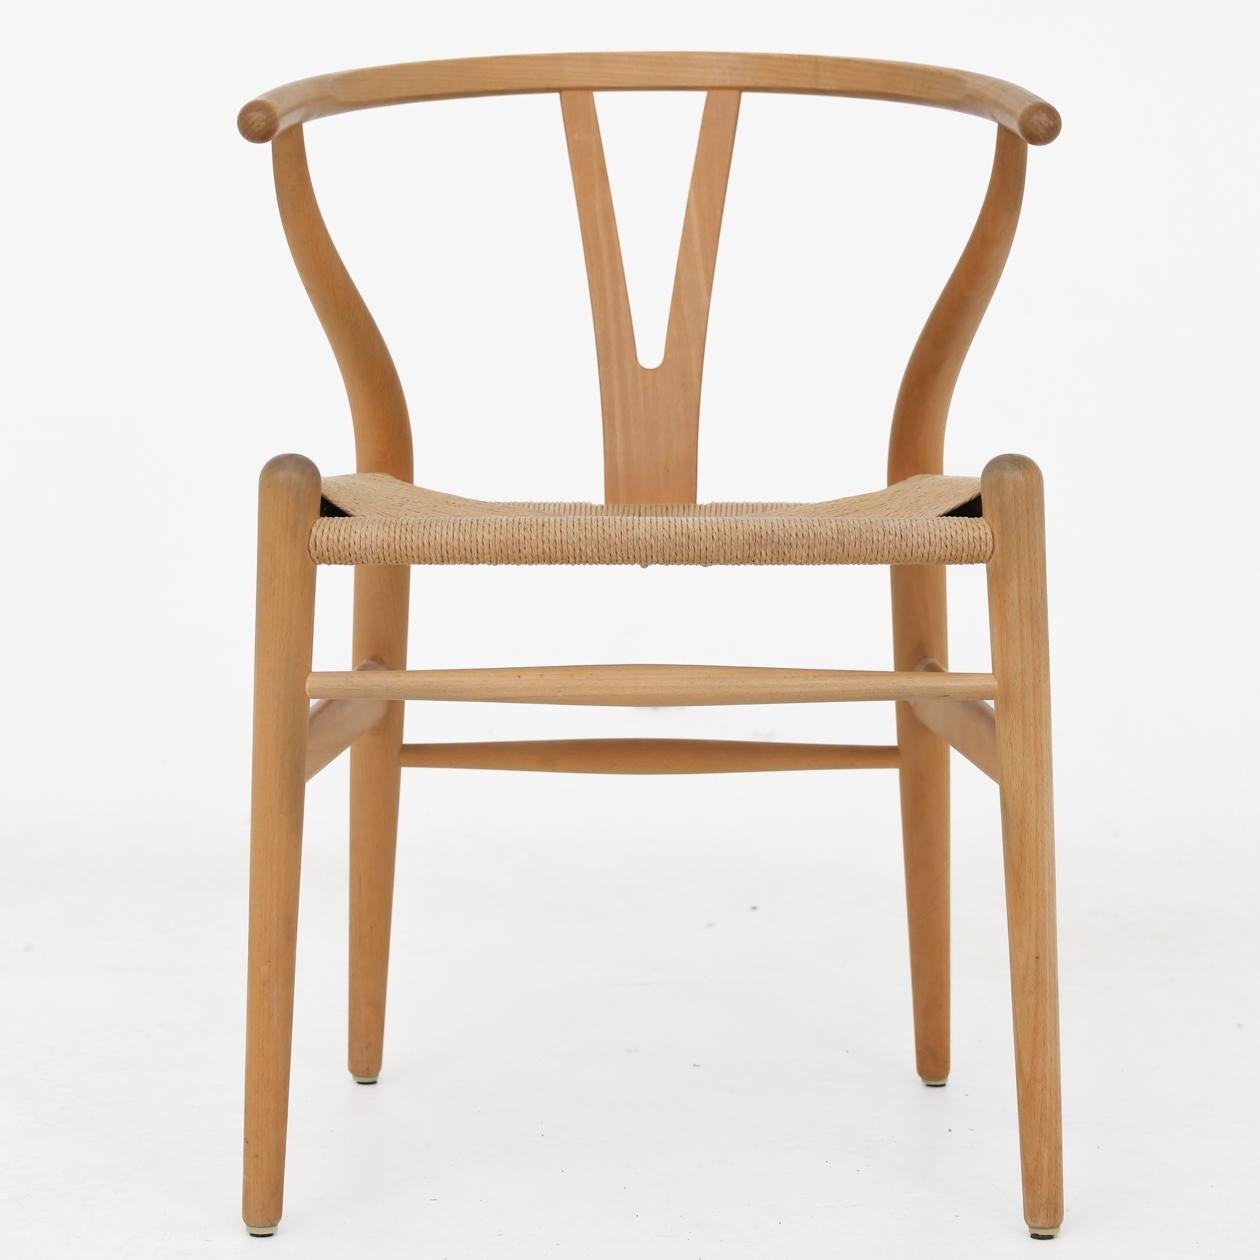 CH 24 - set of 6 'Wishbone' chairs in beech and woven paper yarn. Hans J. Wegner / Carl Hansen.